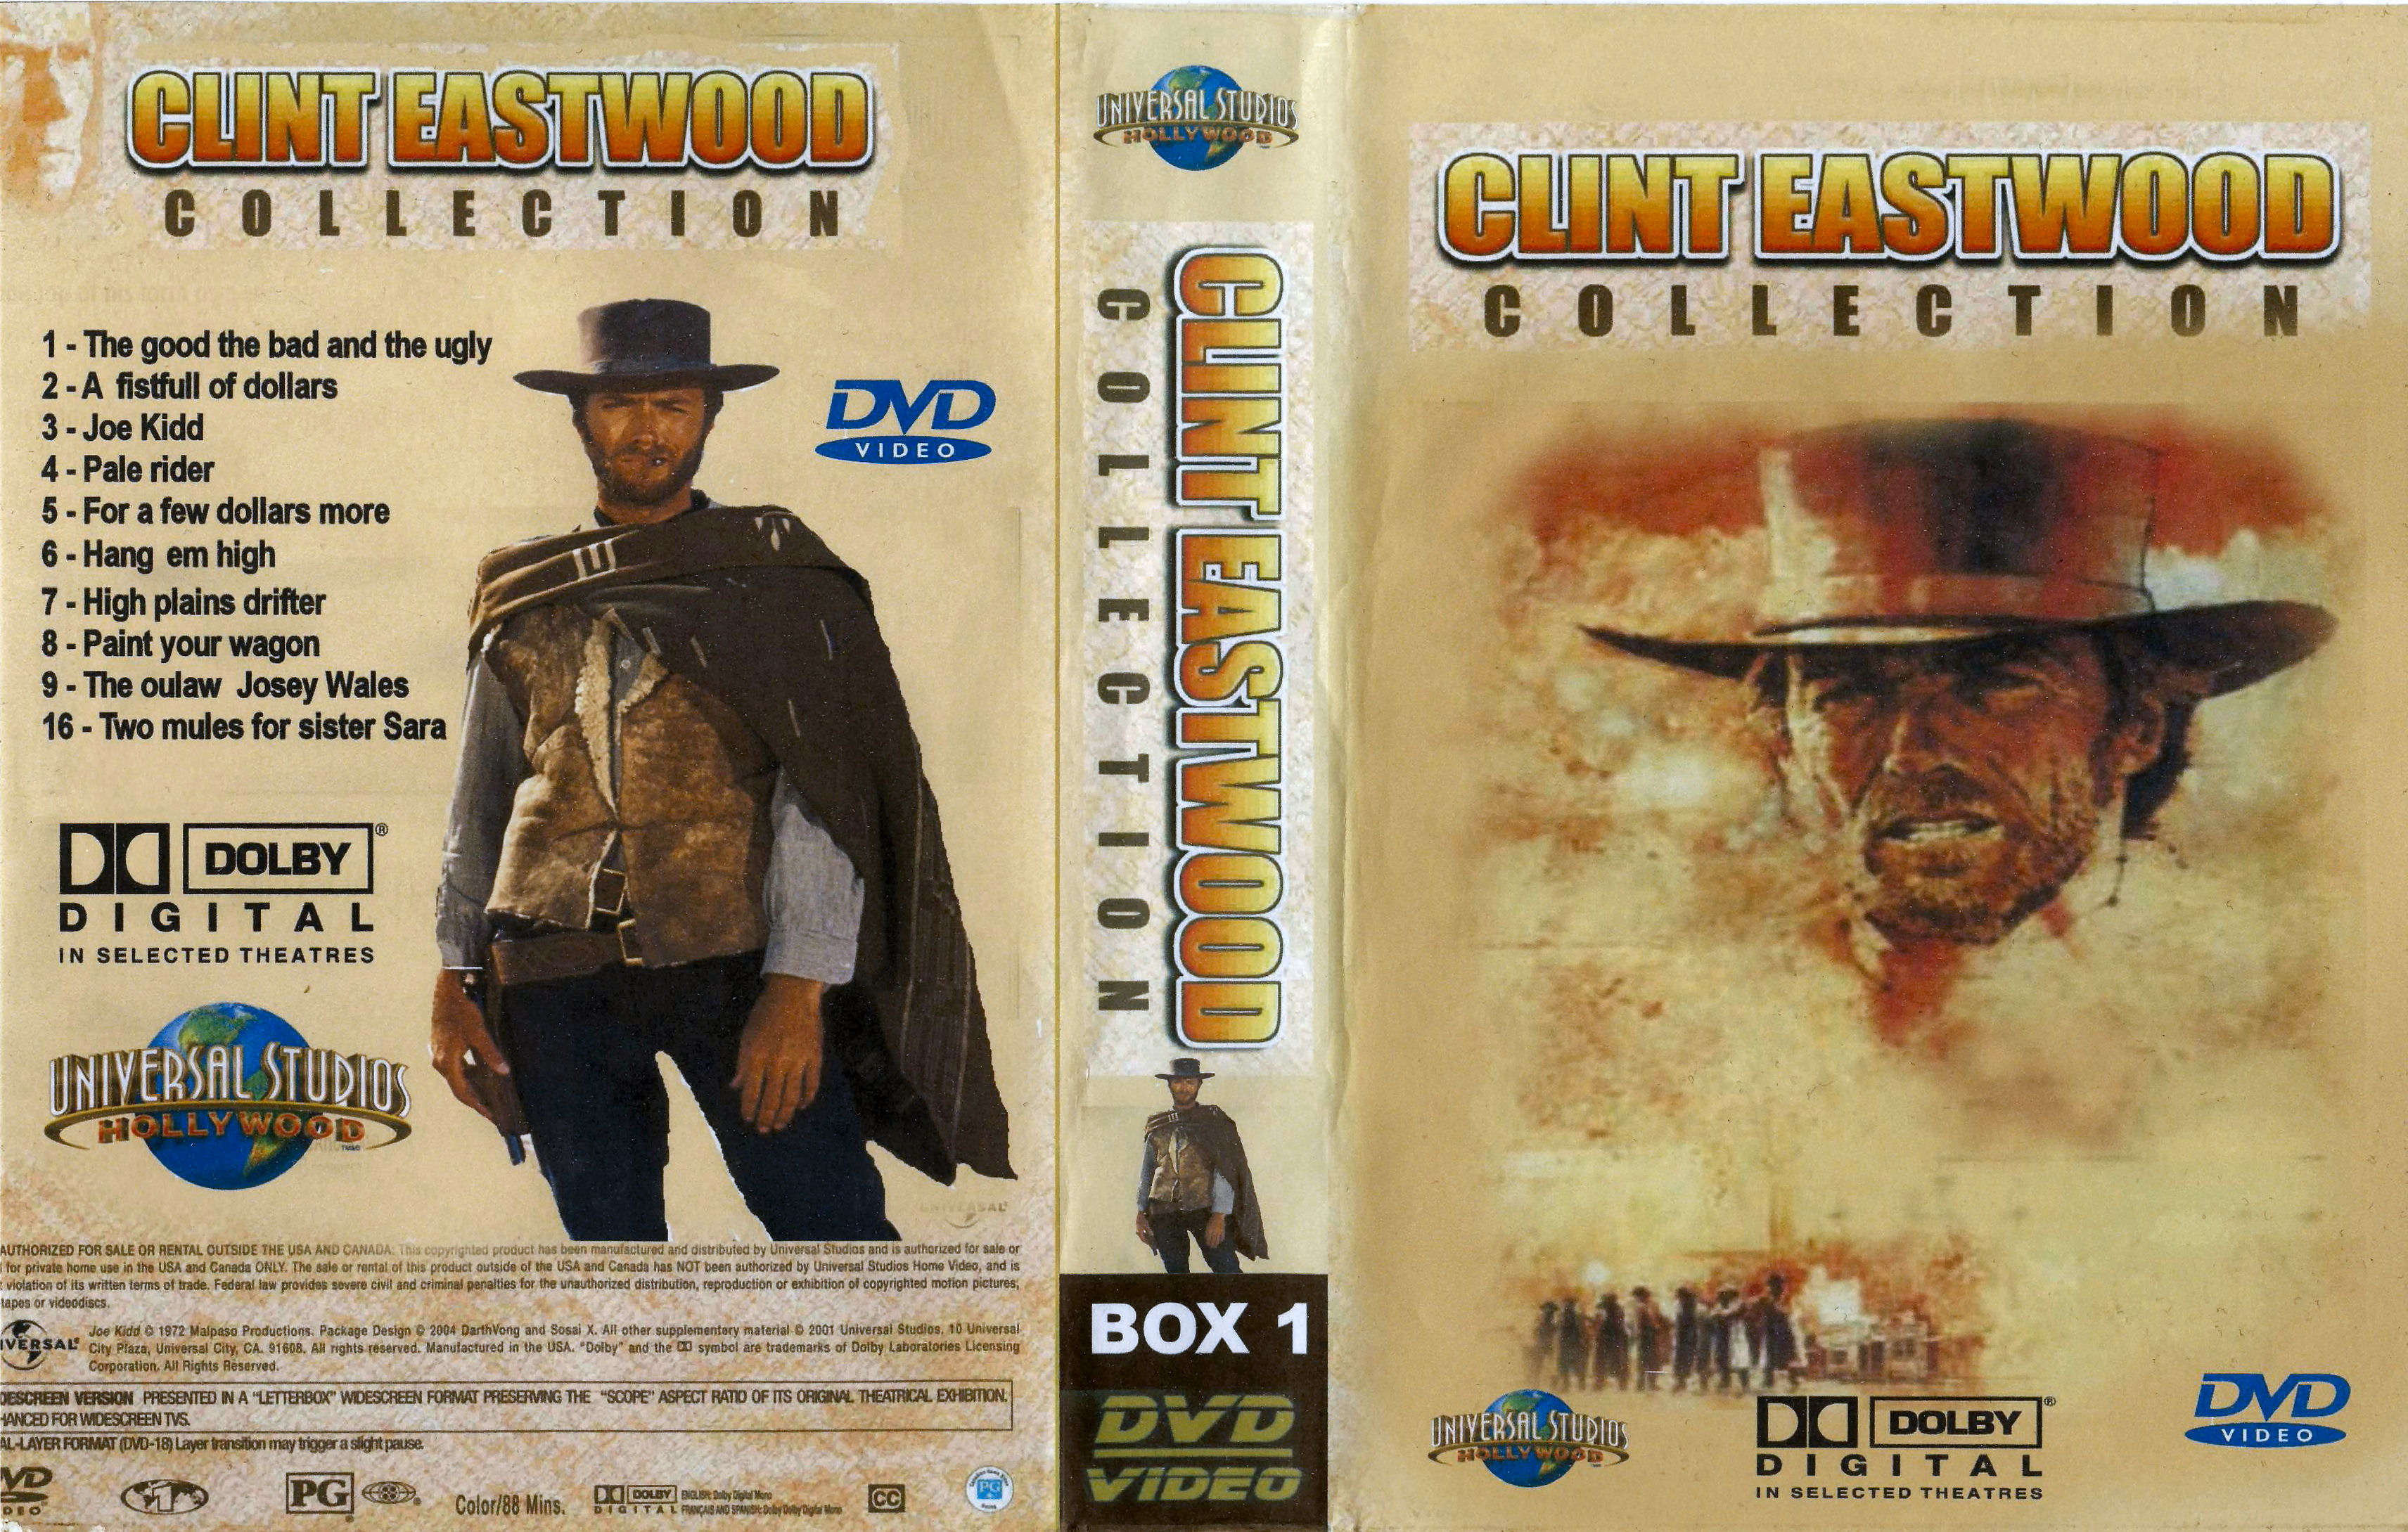 REPOST Clint Eastwood Collectie Box 1 AvD 6 van 10